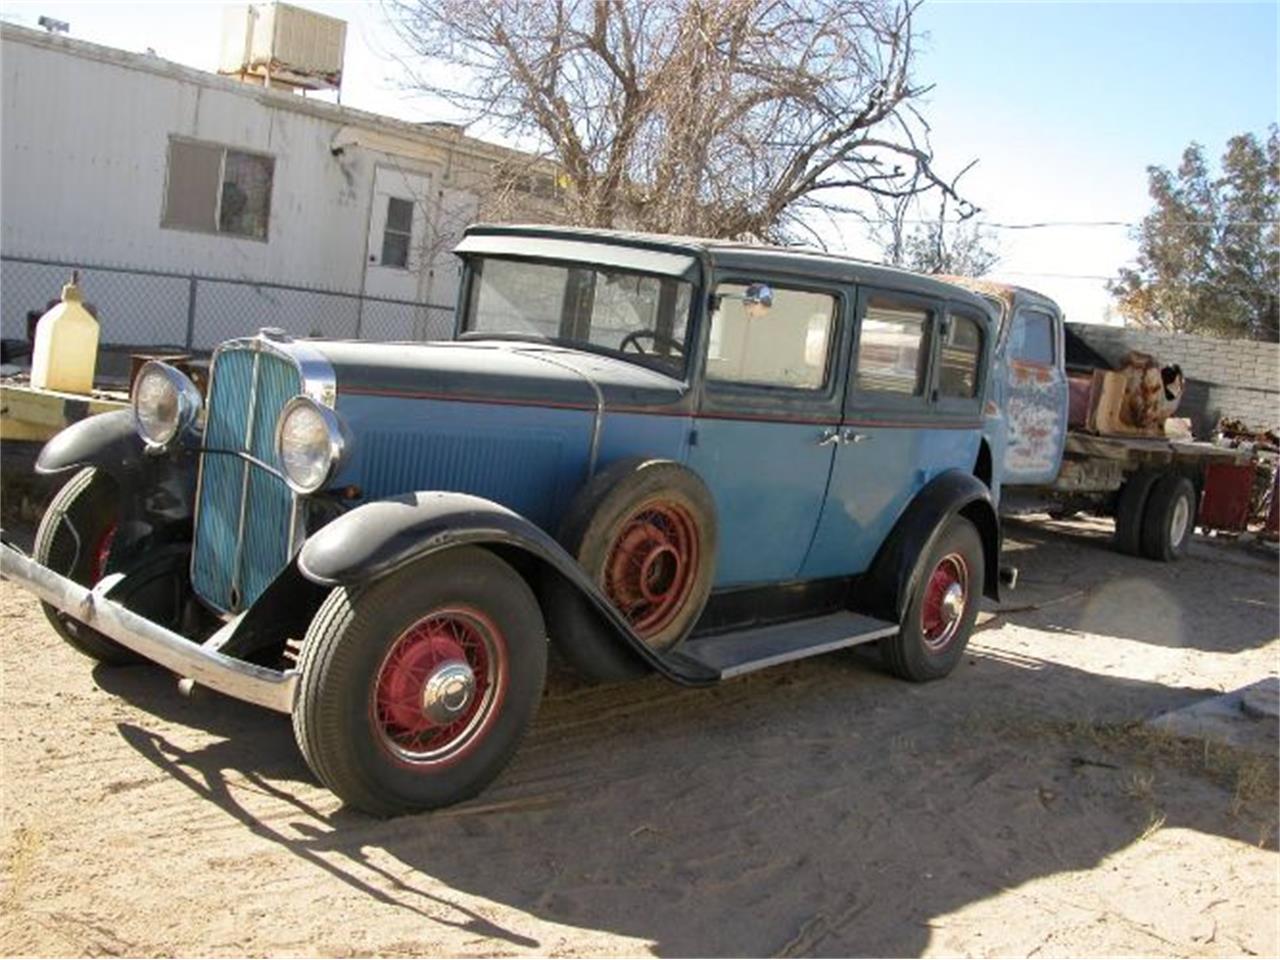 1932 Nash Antique (CC-1441336) for sale in Cadillac, Michigan